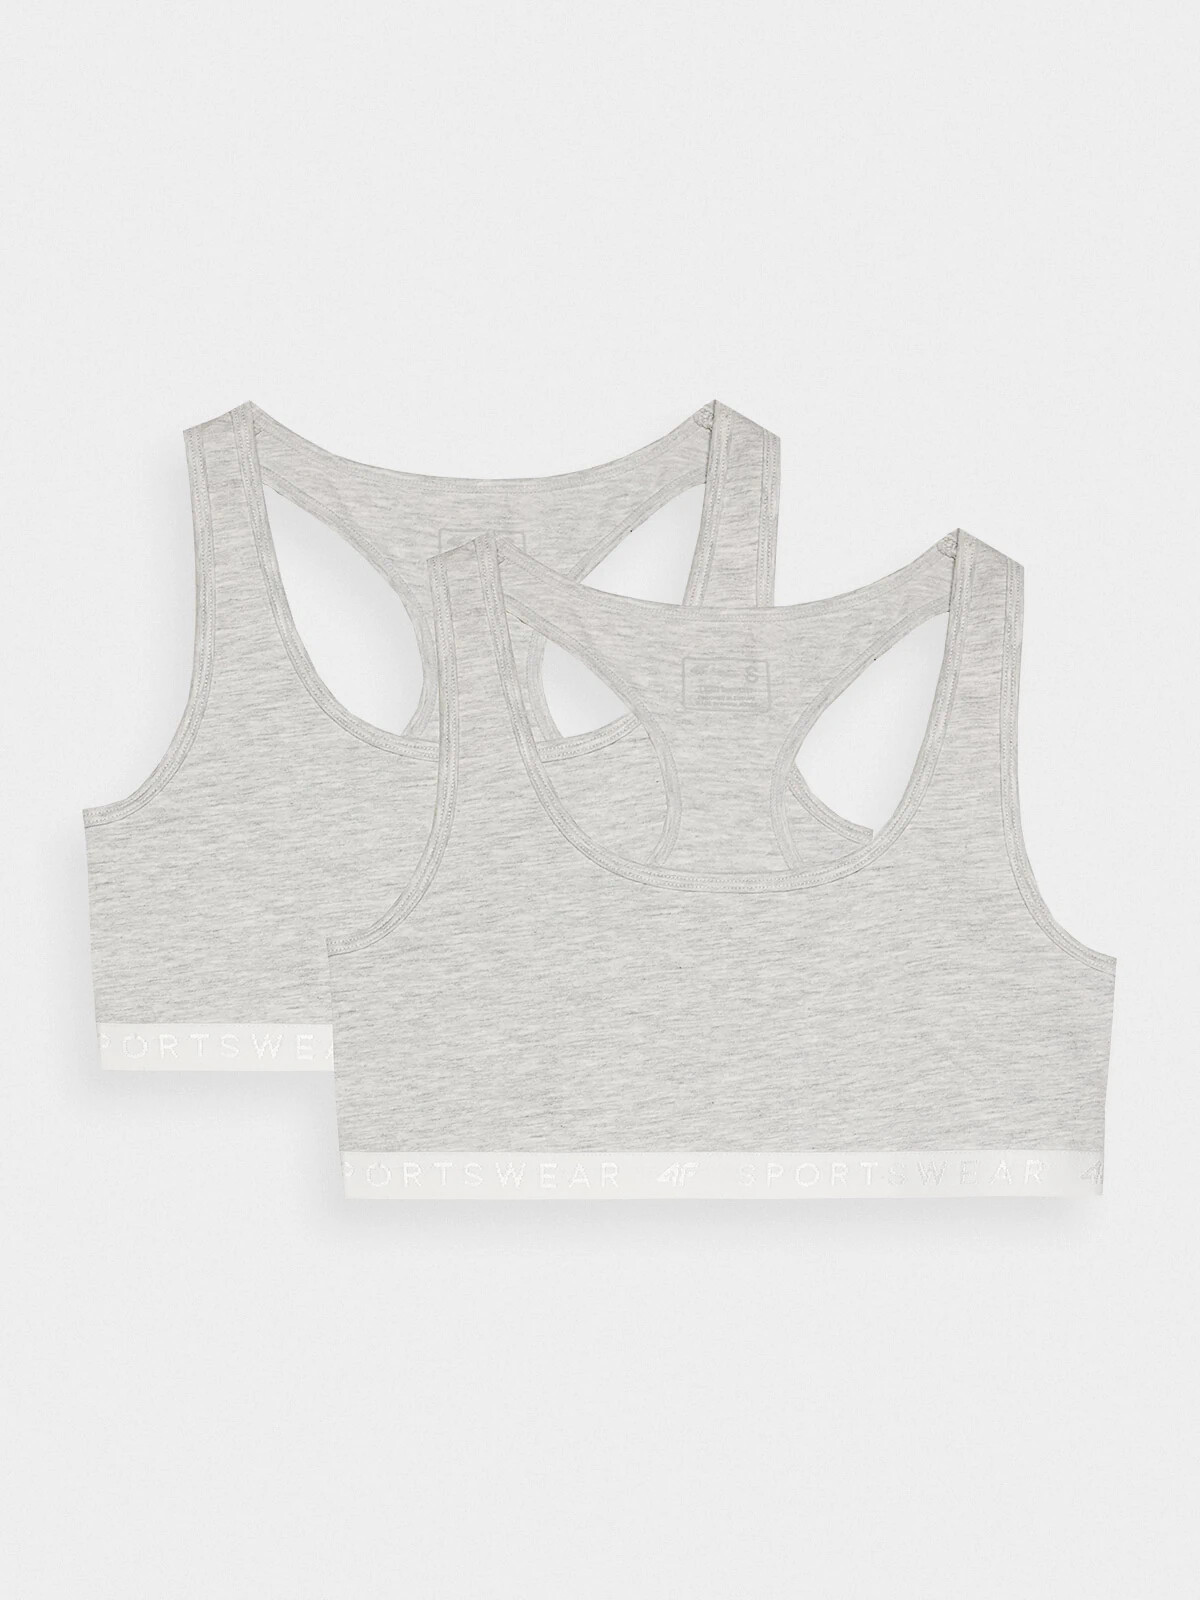 4F Women's Cotton Everyday Bra (2 Pack) - Grey